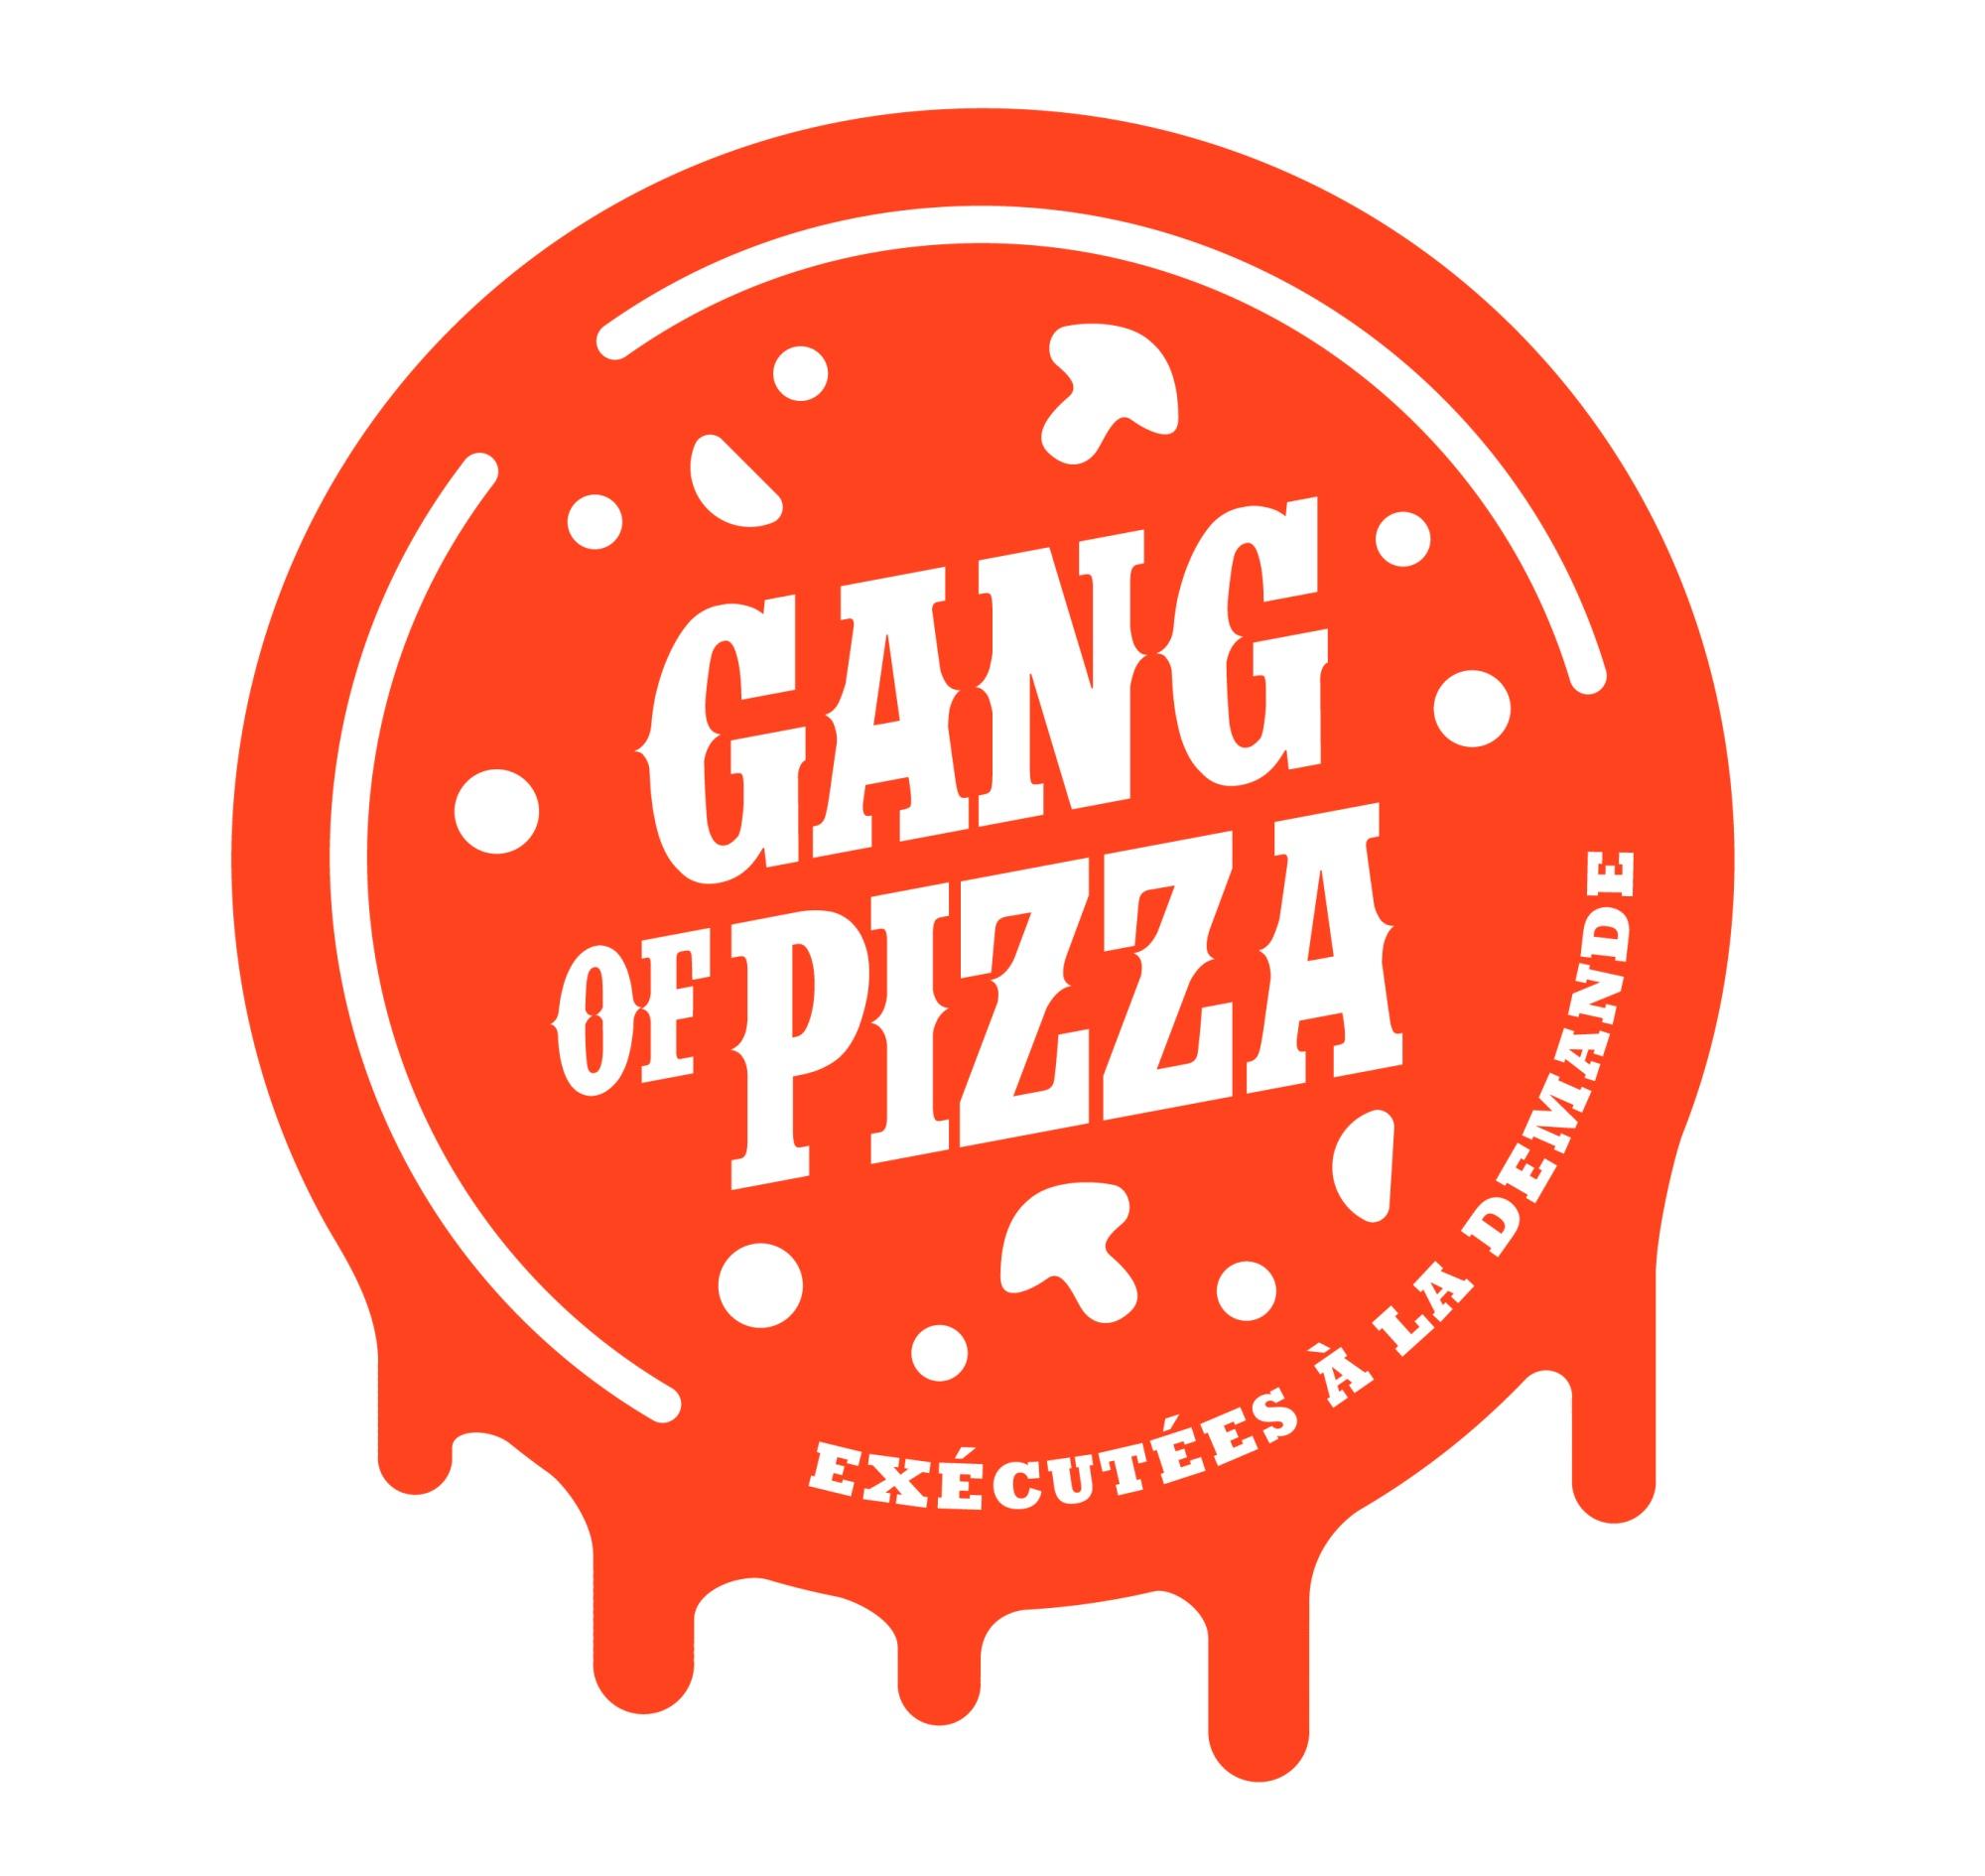 Gang Of Pizza Thénezay